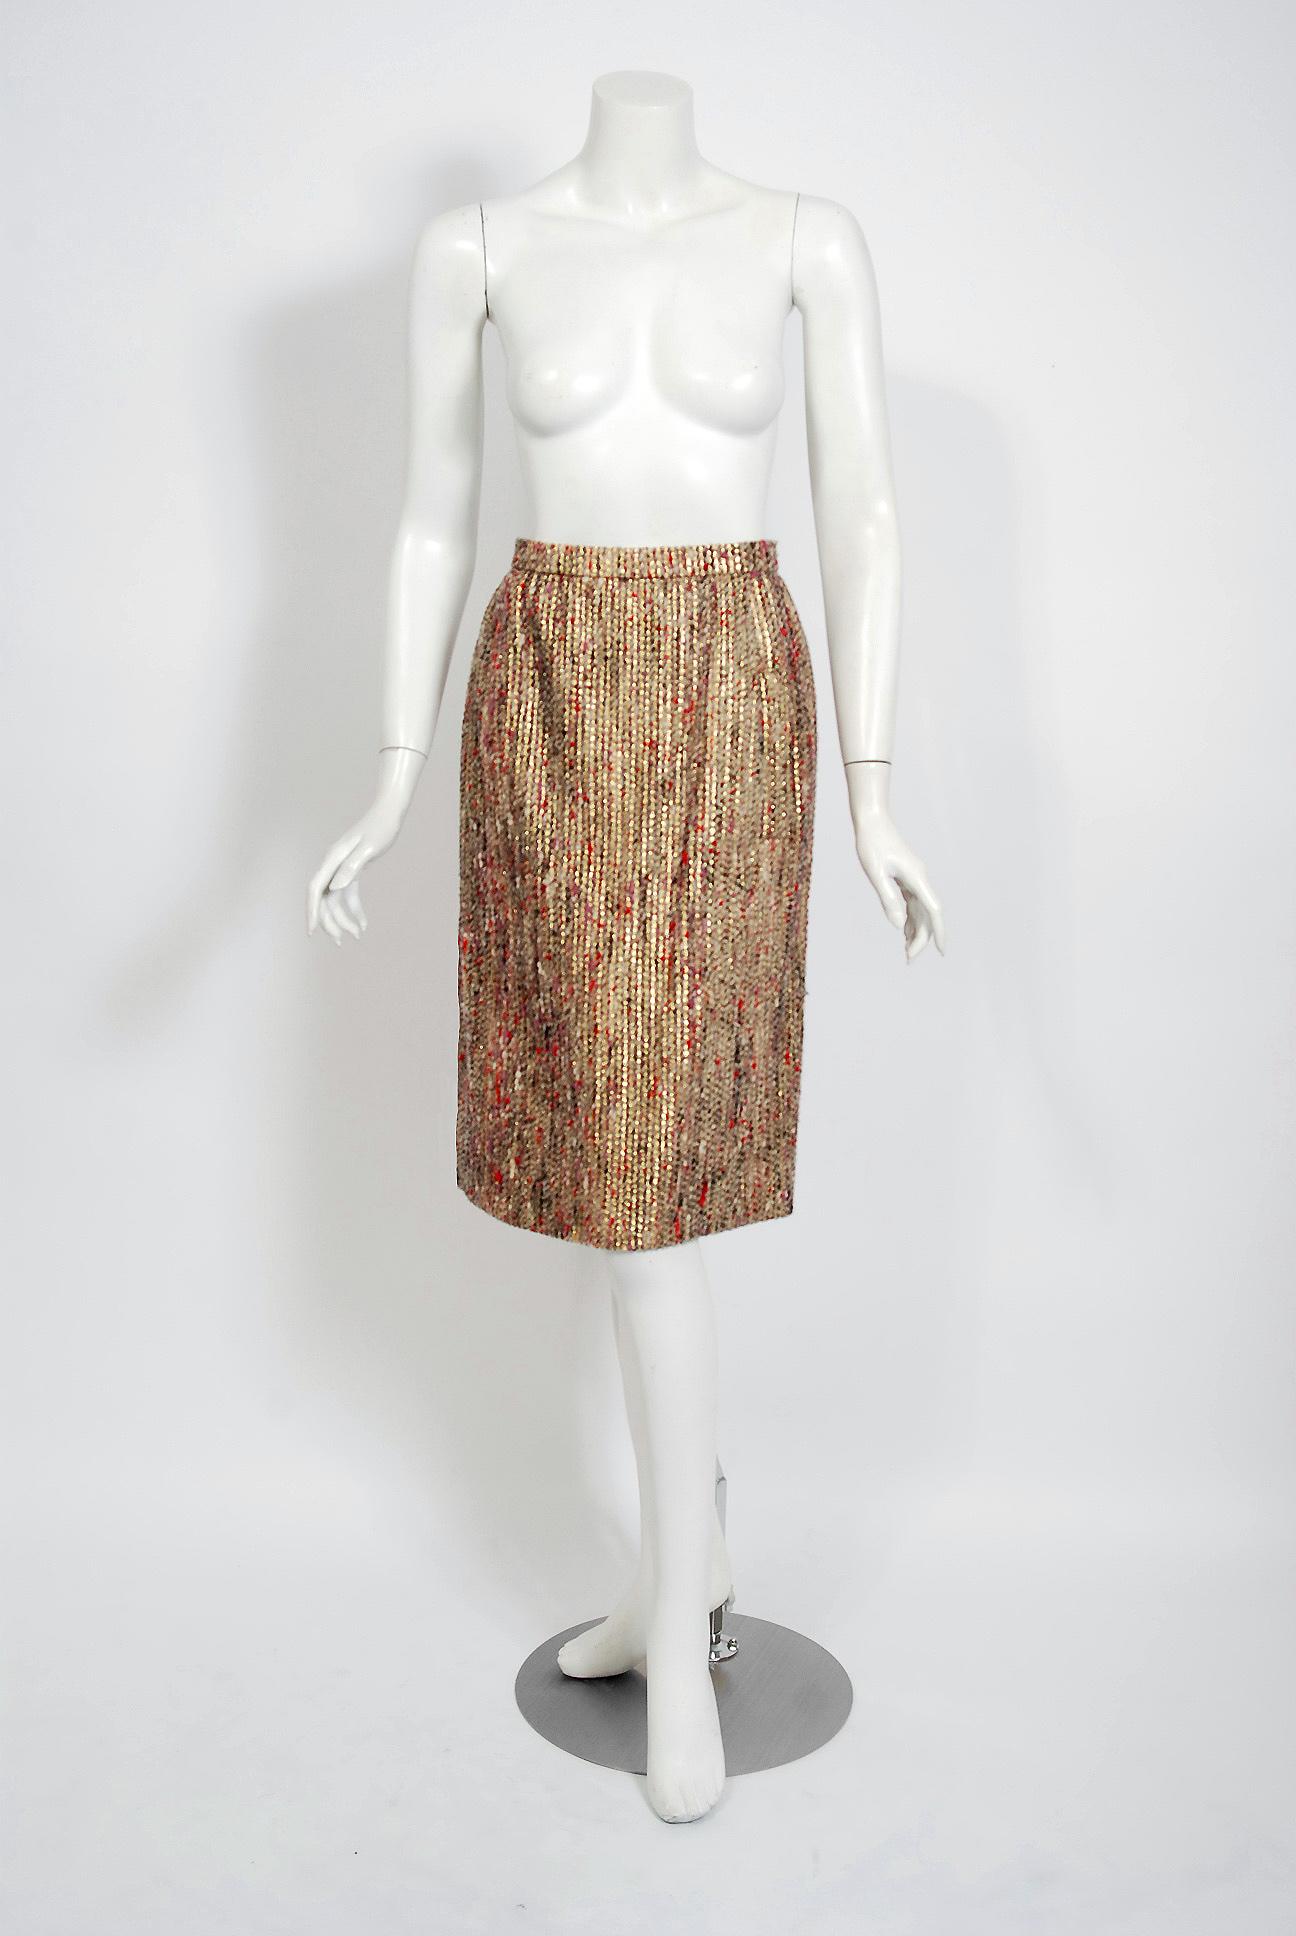 Women's Vintage 1963 Christian Dior Gold Lamé & Textured Wool Documented Dress Suit